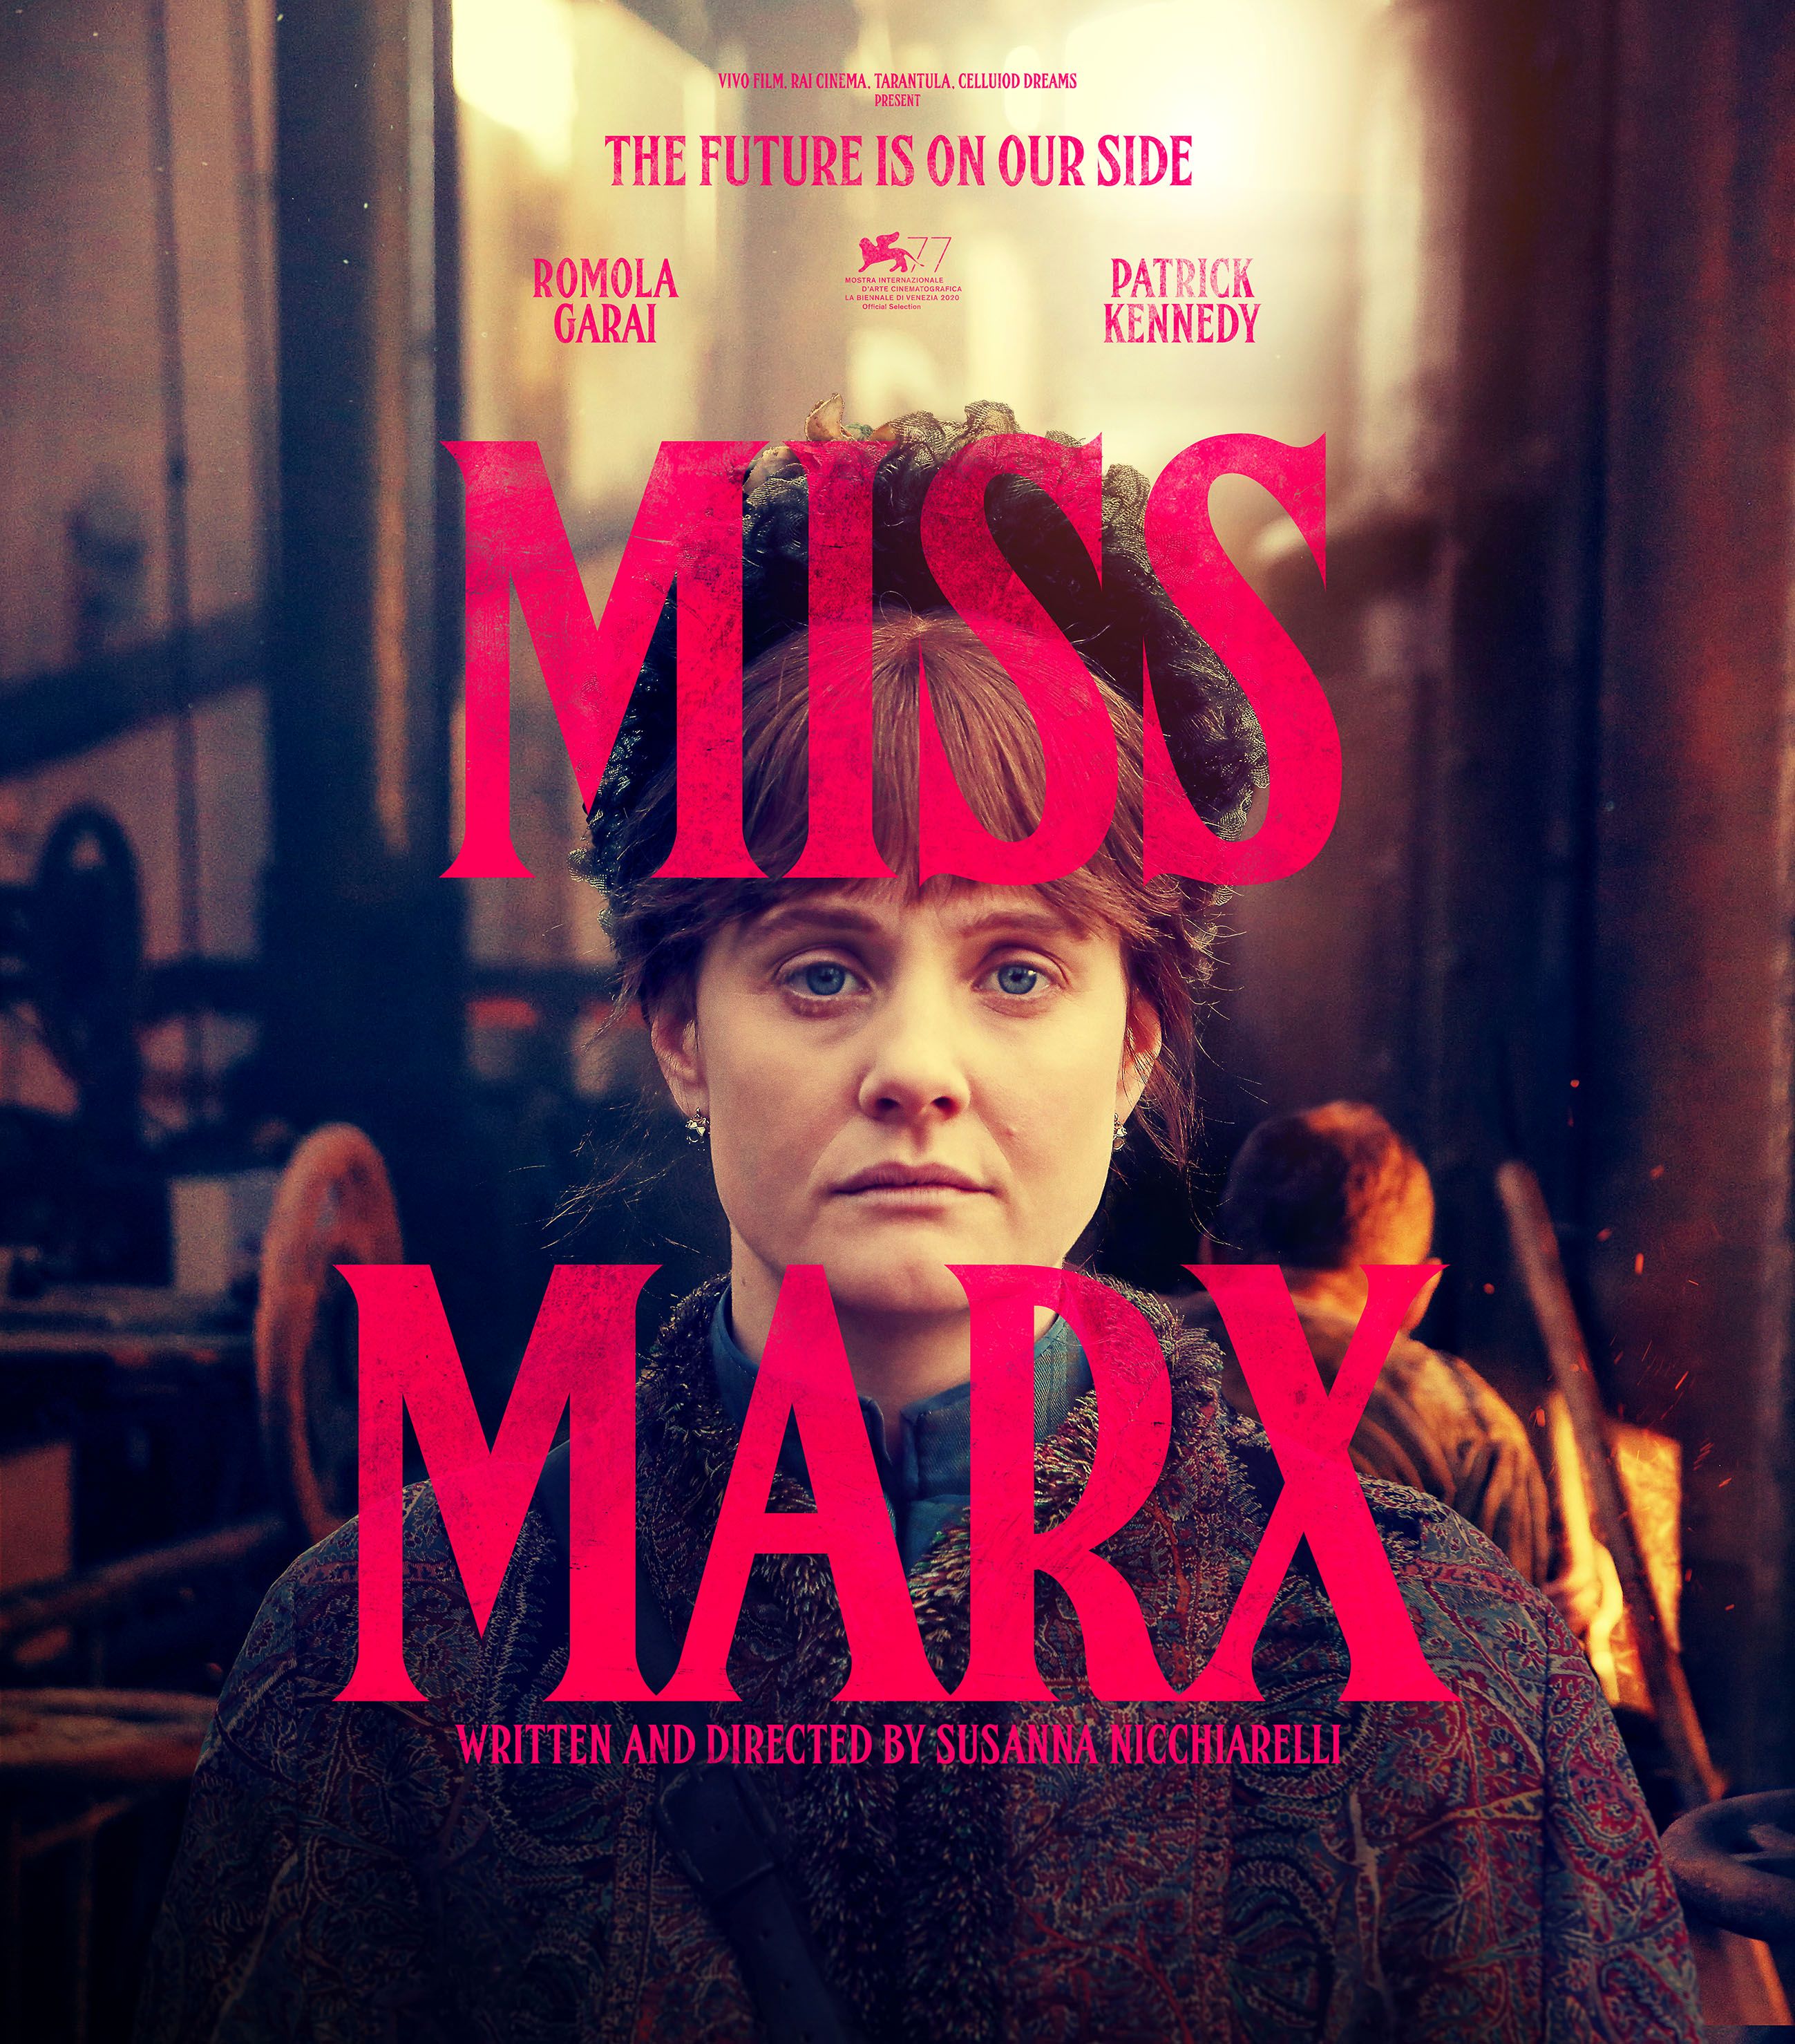 'Miss Marx', disrupting Australian cinemas from March 3